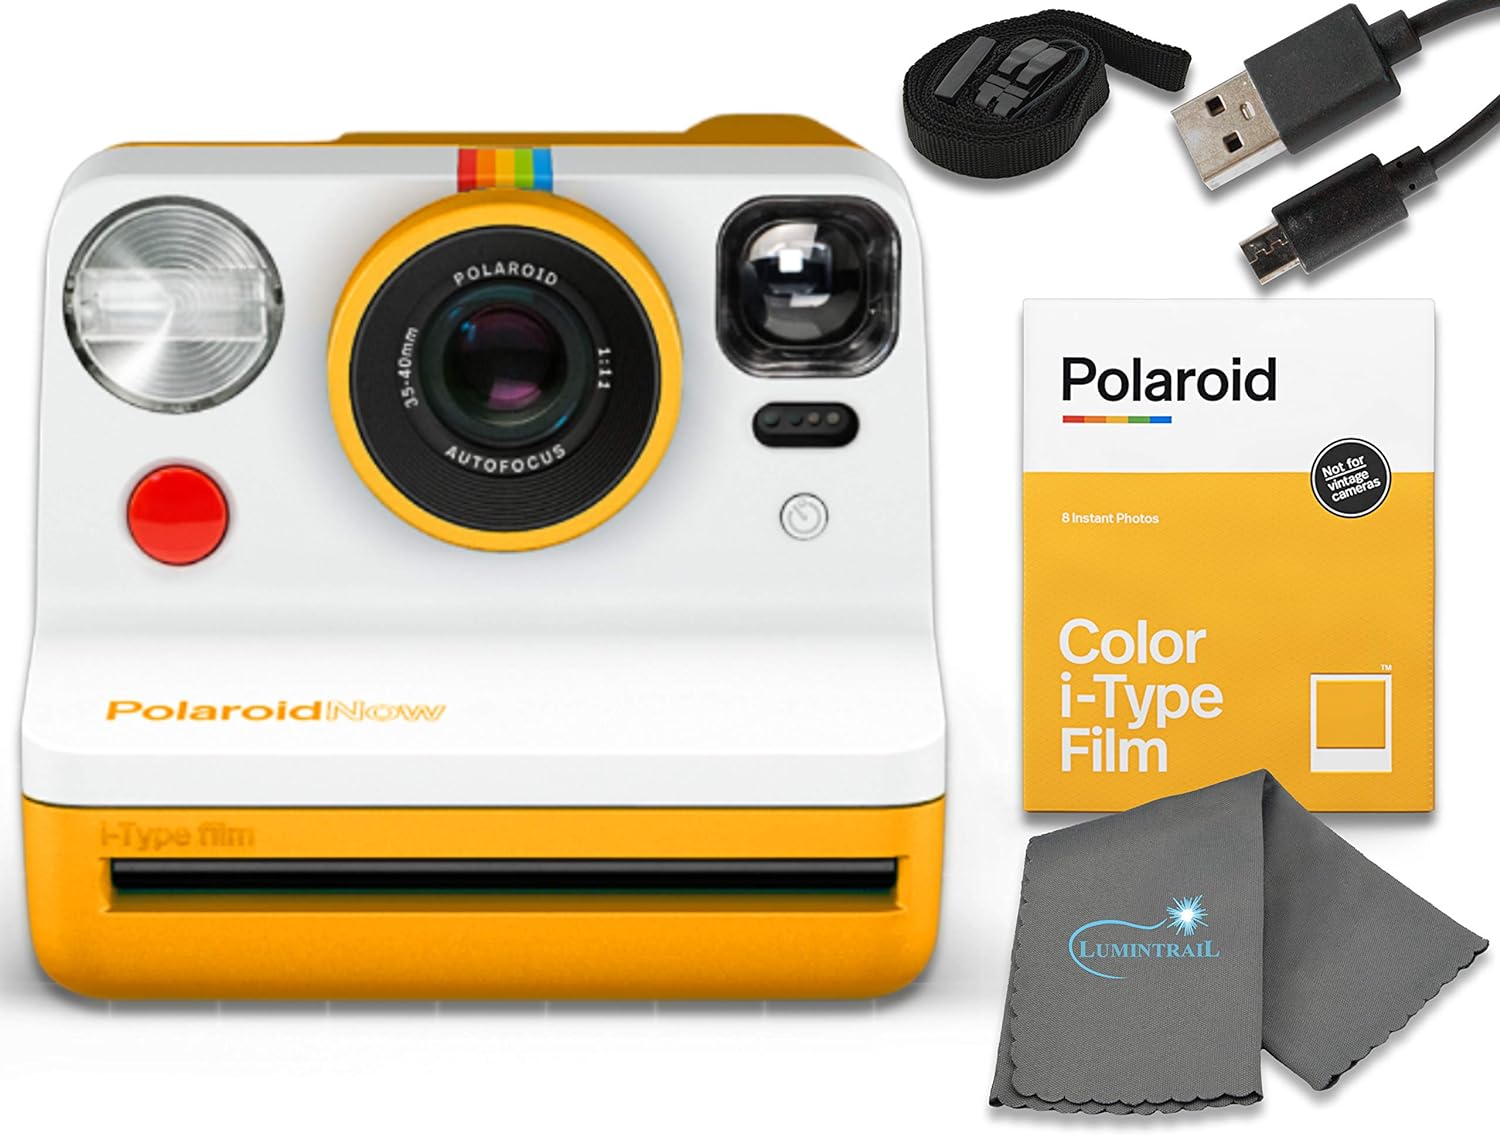 Yellow polaroid camera